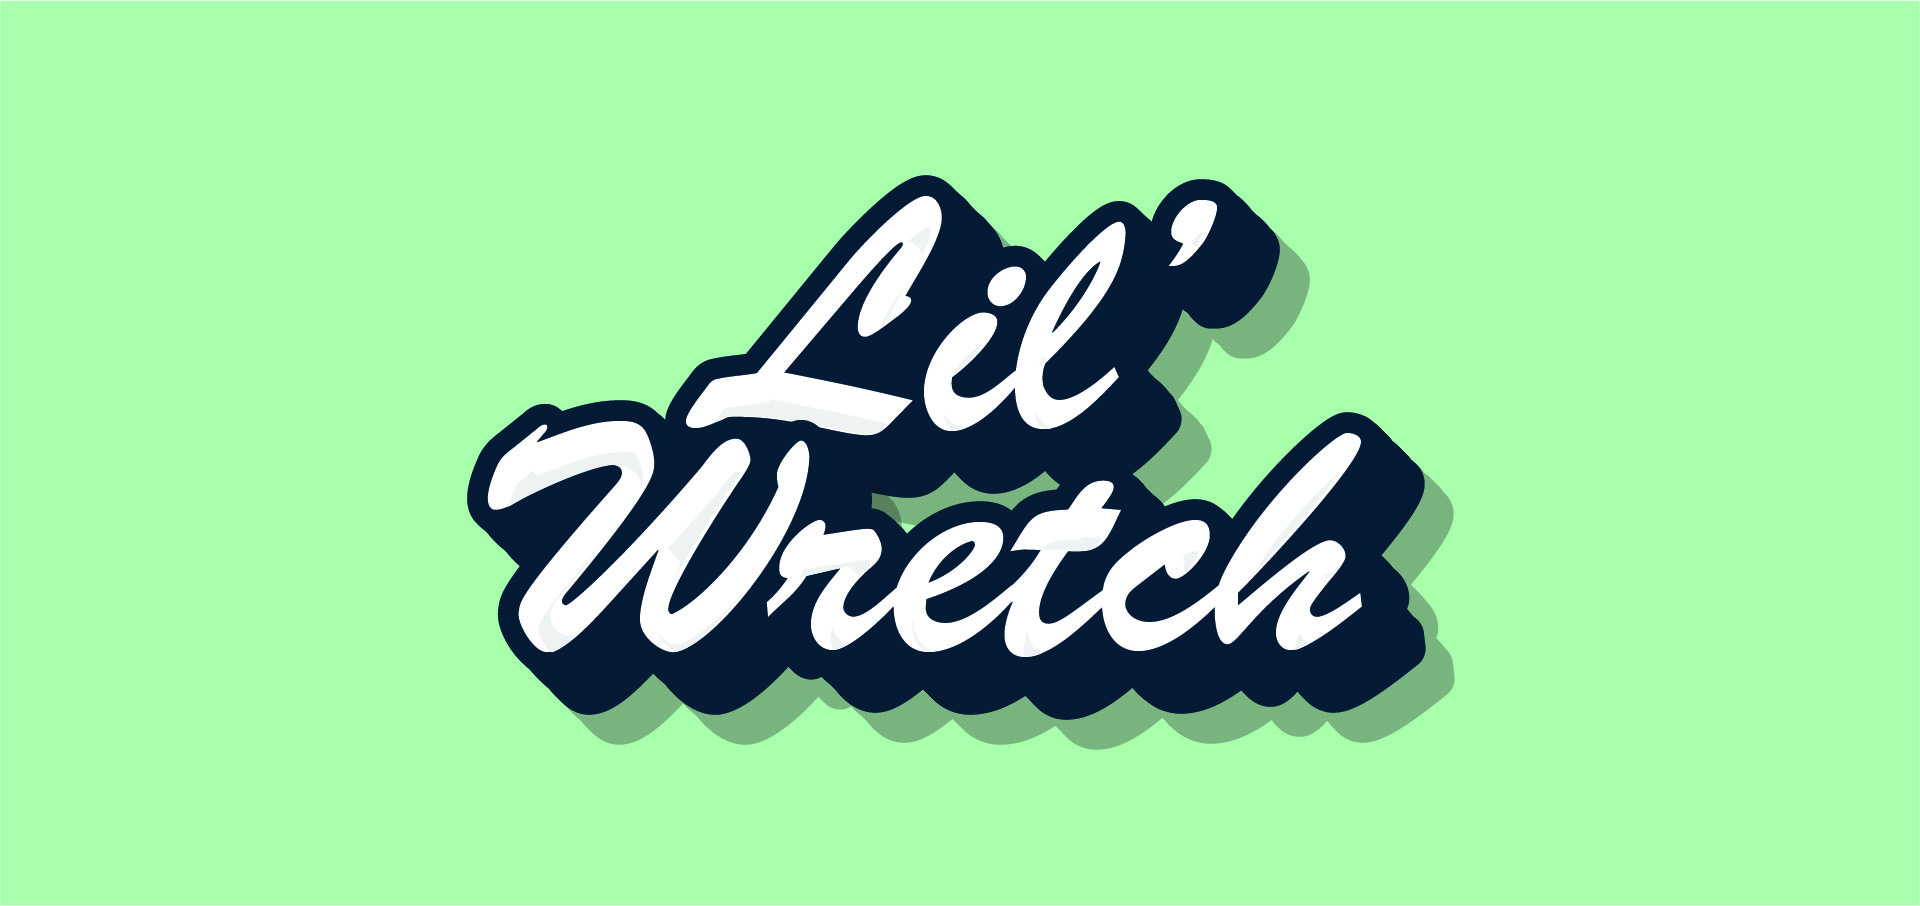 Lil' Wretch